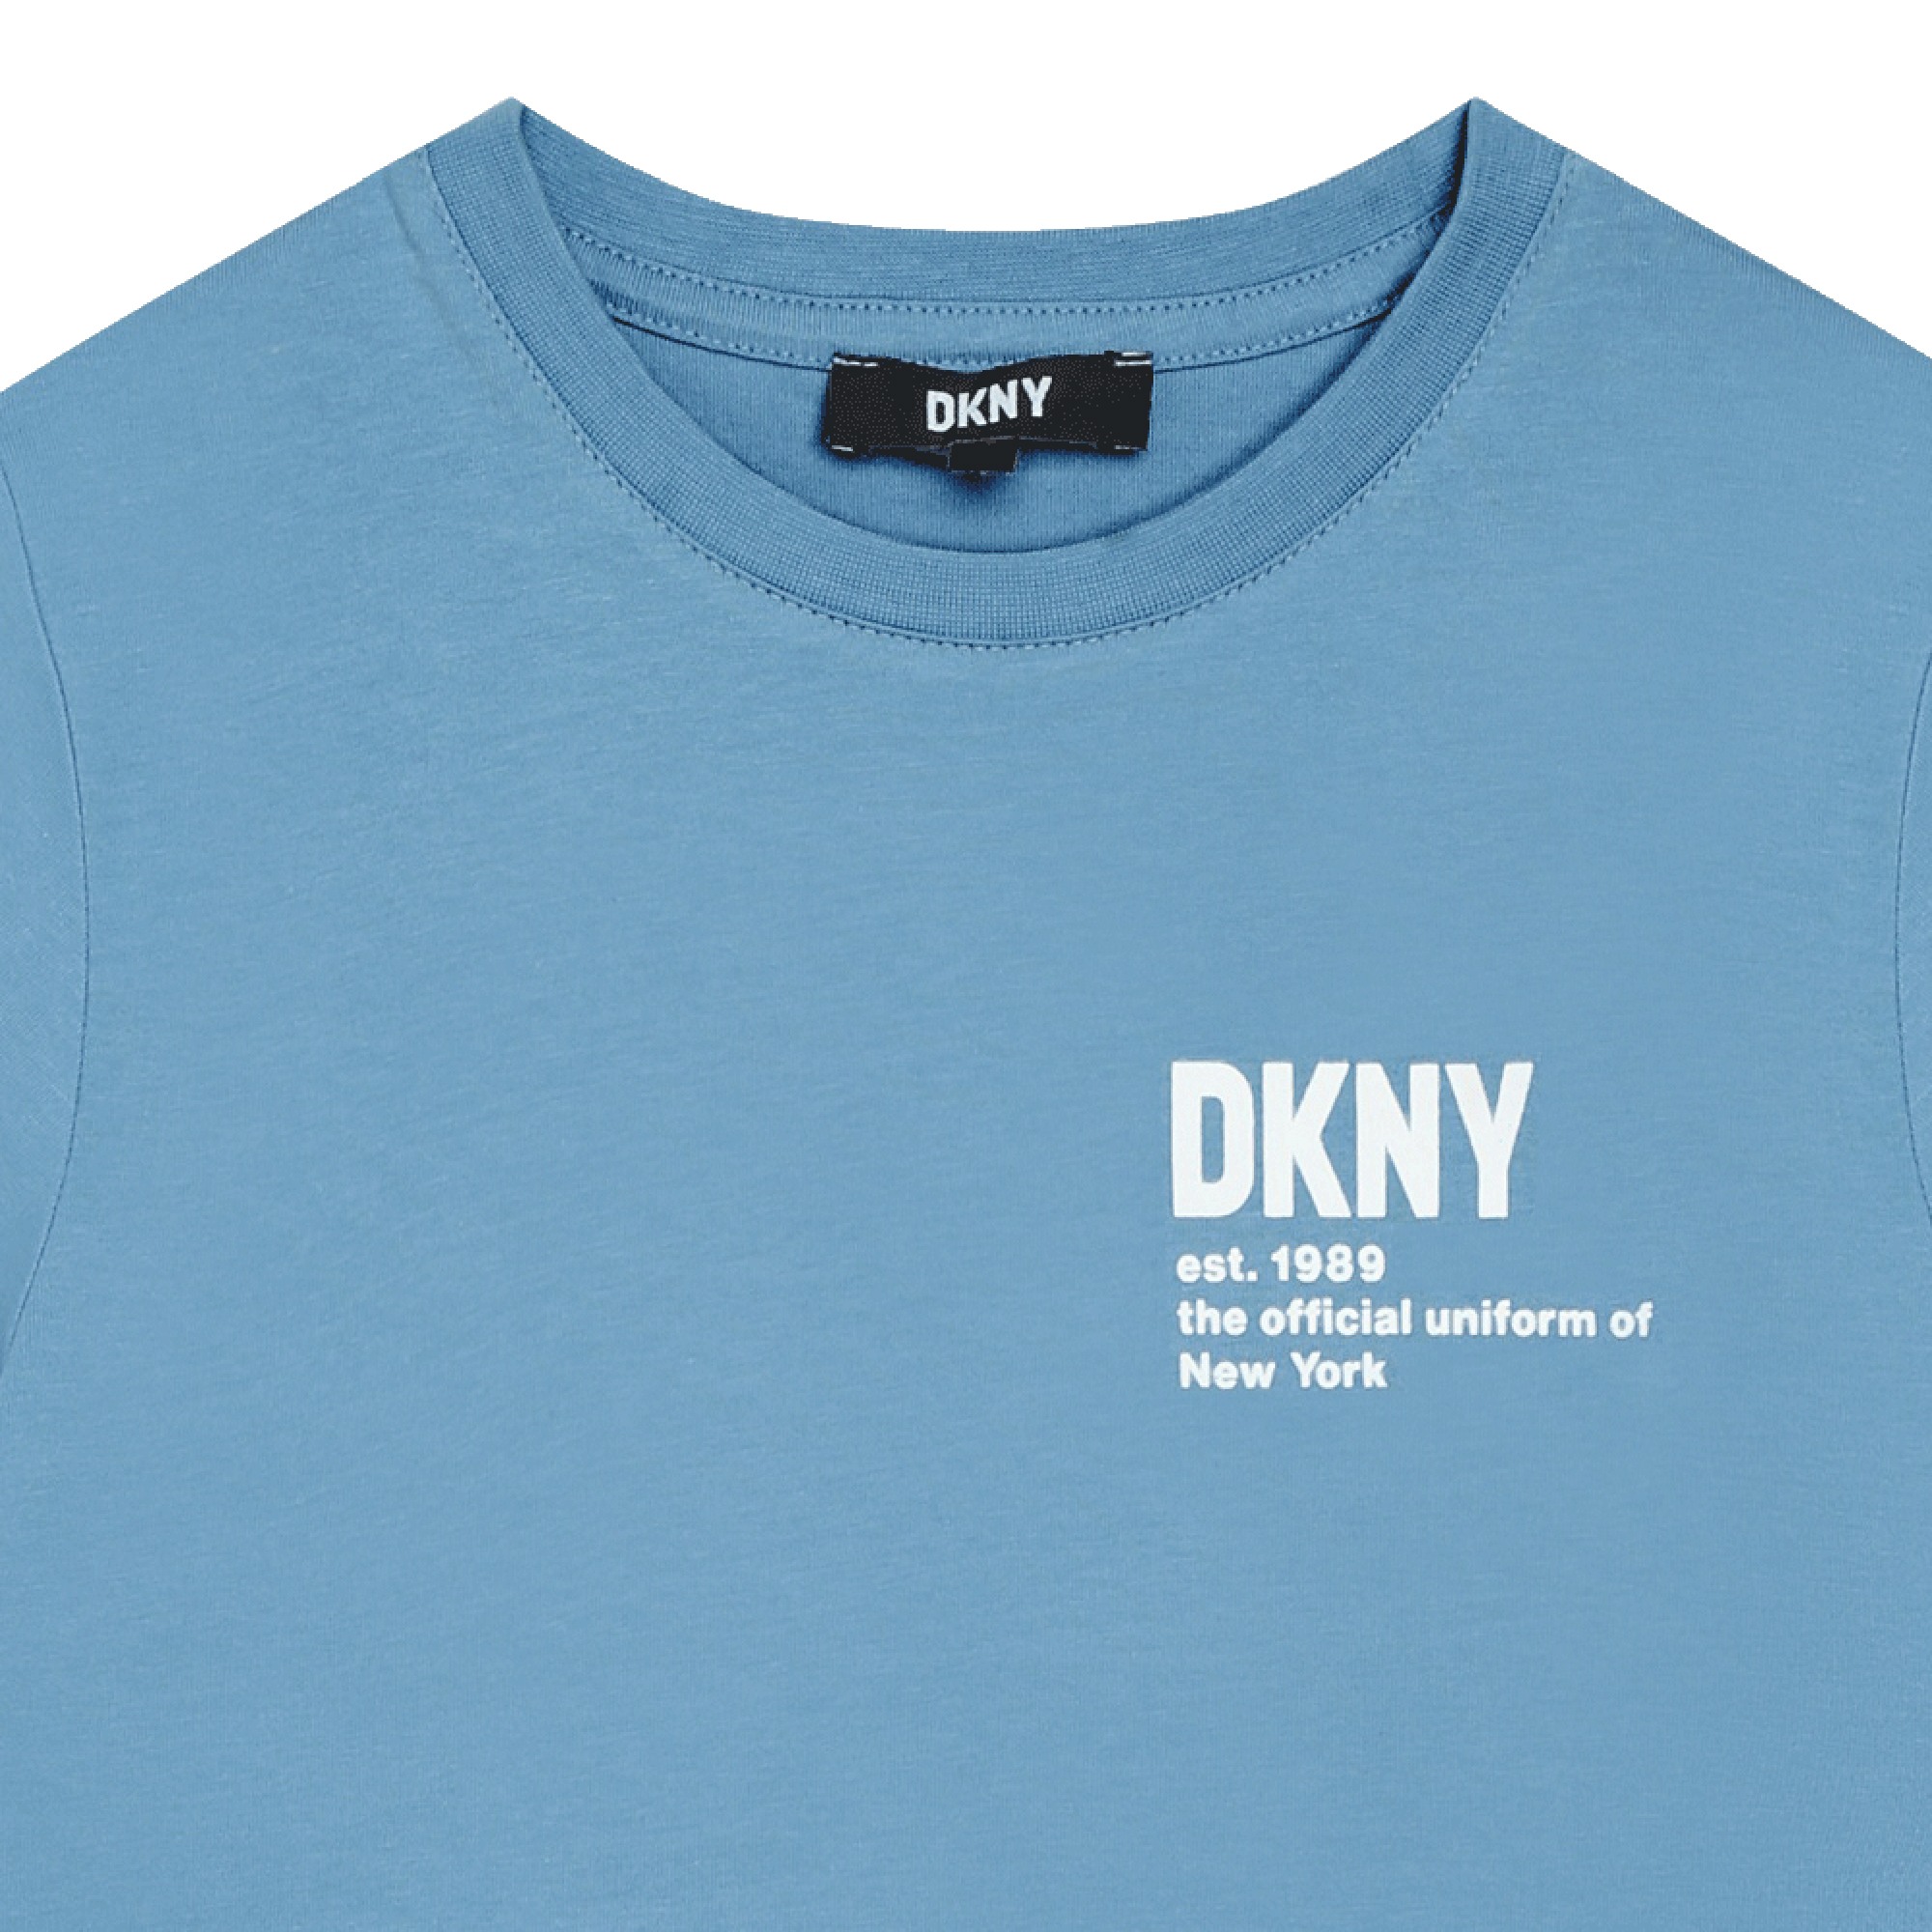 Kurzärmeliges Baumwollshirt DKNY Für UNISEX